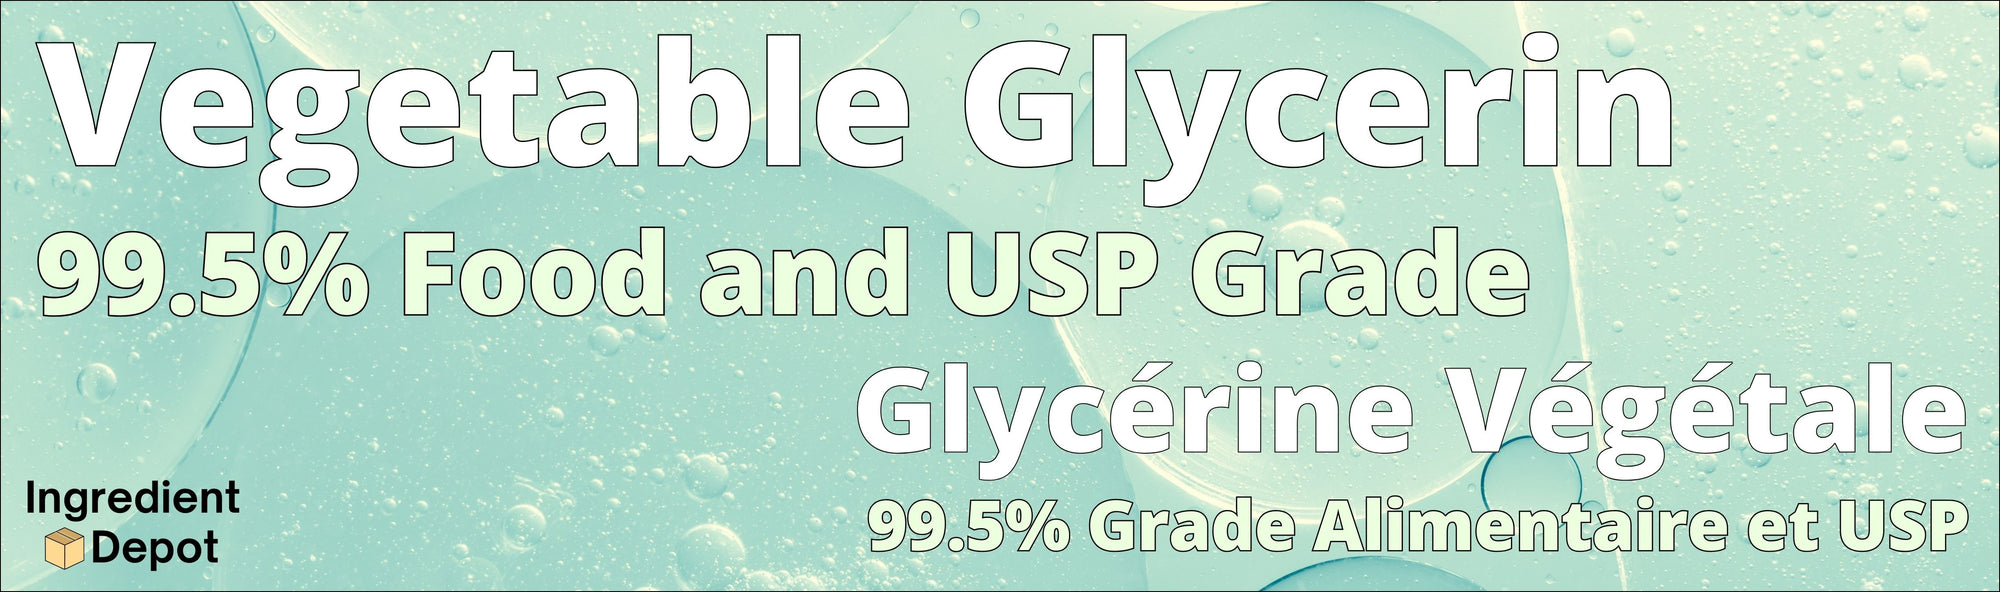 Ingredient Depot Vegetable Glycerin 99.5 USP Grade